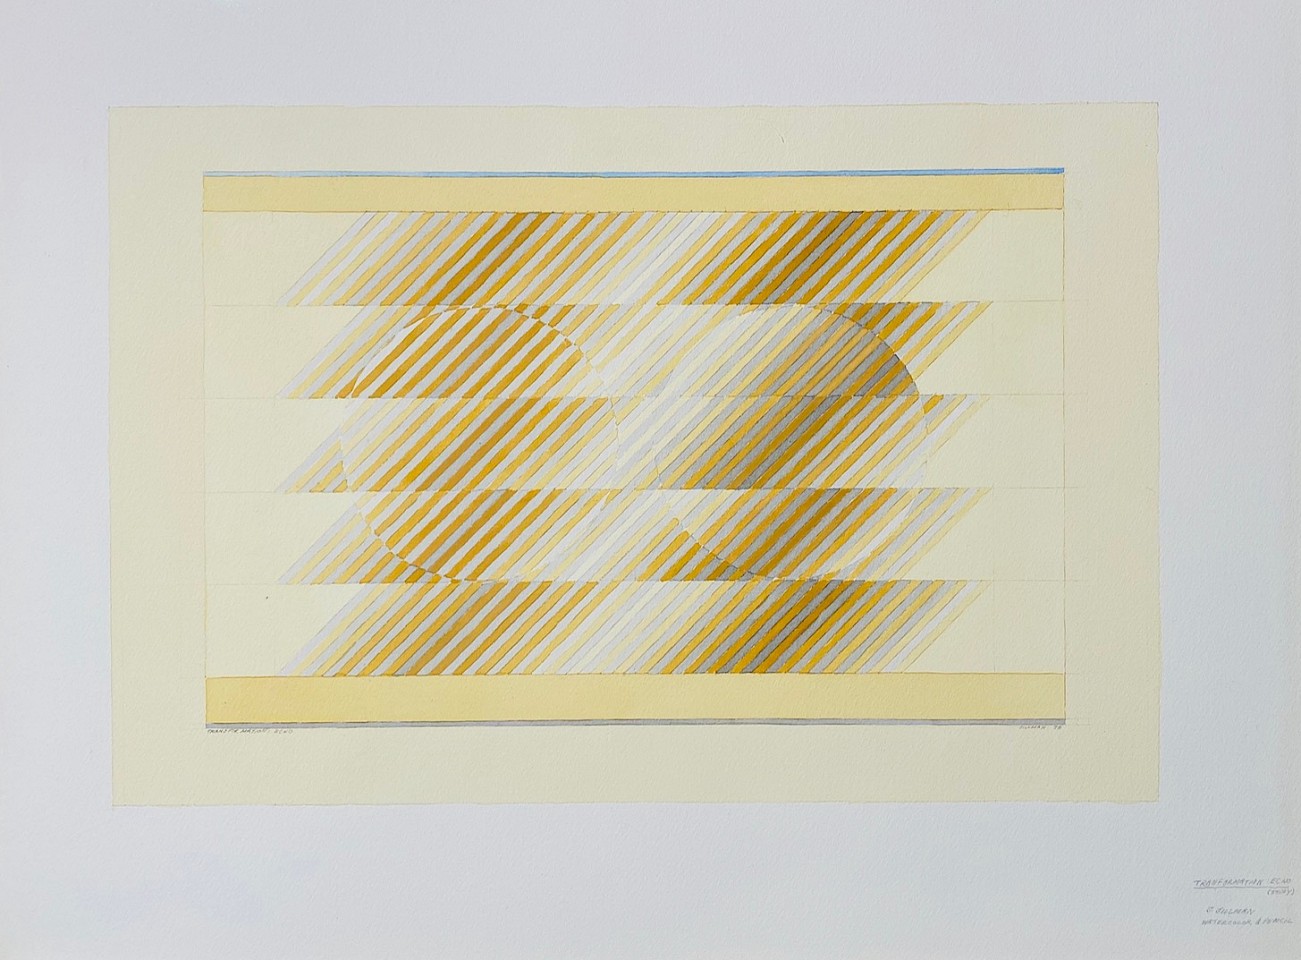 Sewell Sillman, Transformation Echo (Study)
watercolor and pencil, Sheet: 18"" x 24""   Image: 7 1/2"" x 11""
JCA 6420
$4,500